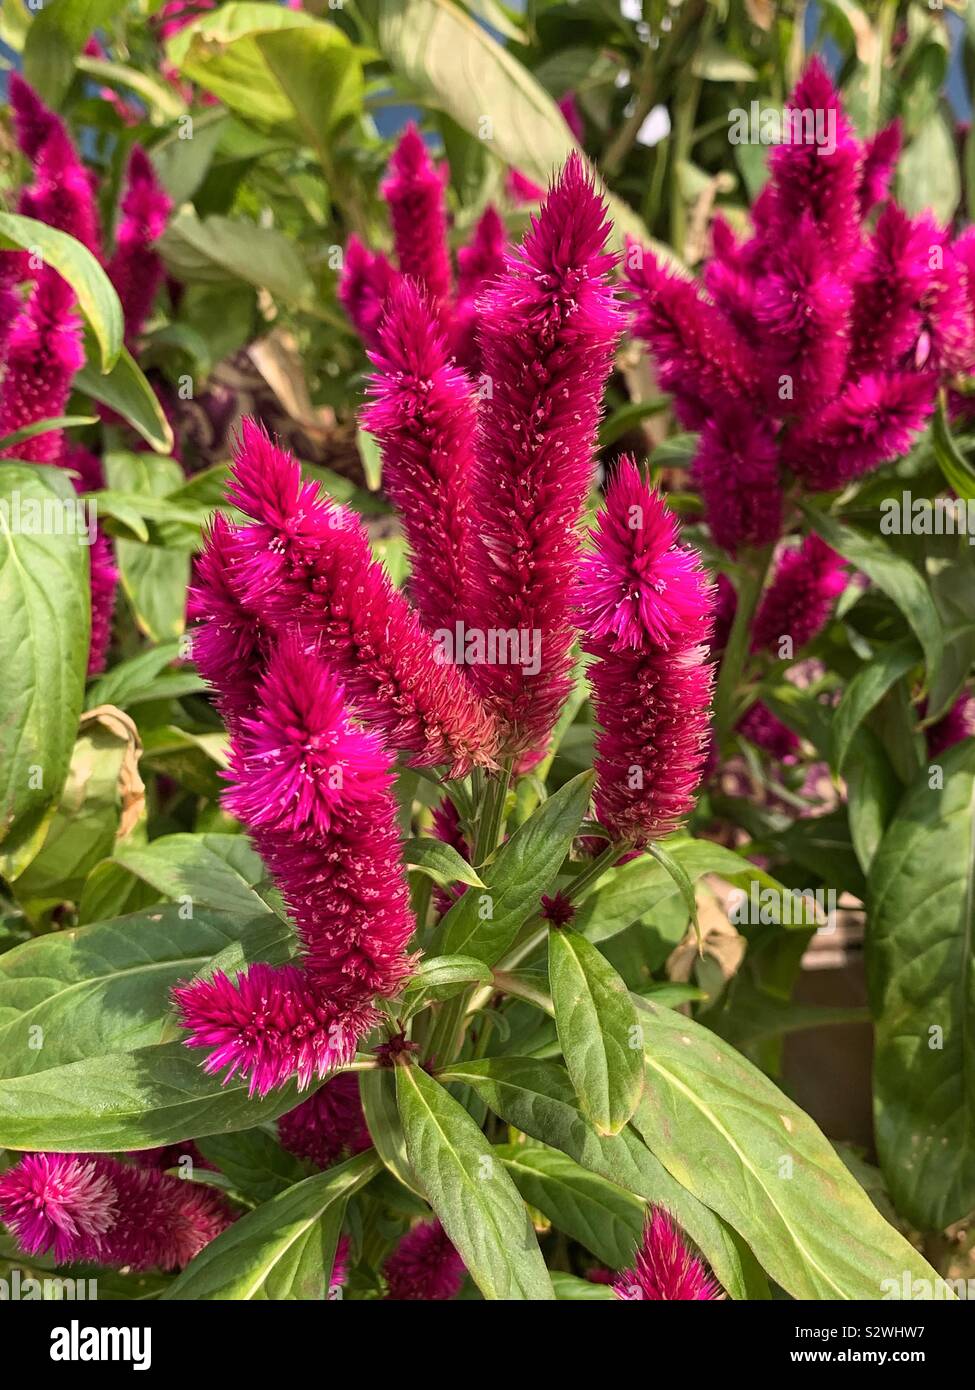 Celosias, Celiosa, cockscomb, feathered amaranth, woolflower, red fox, spicata, pink bottle brush flower. Stock Photo